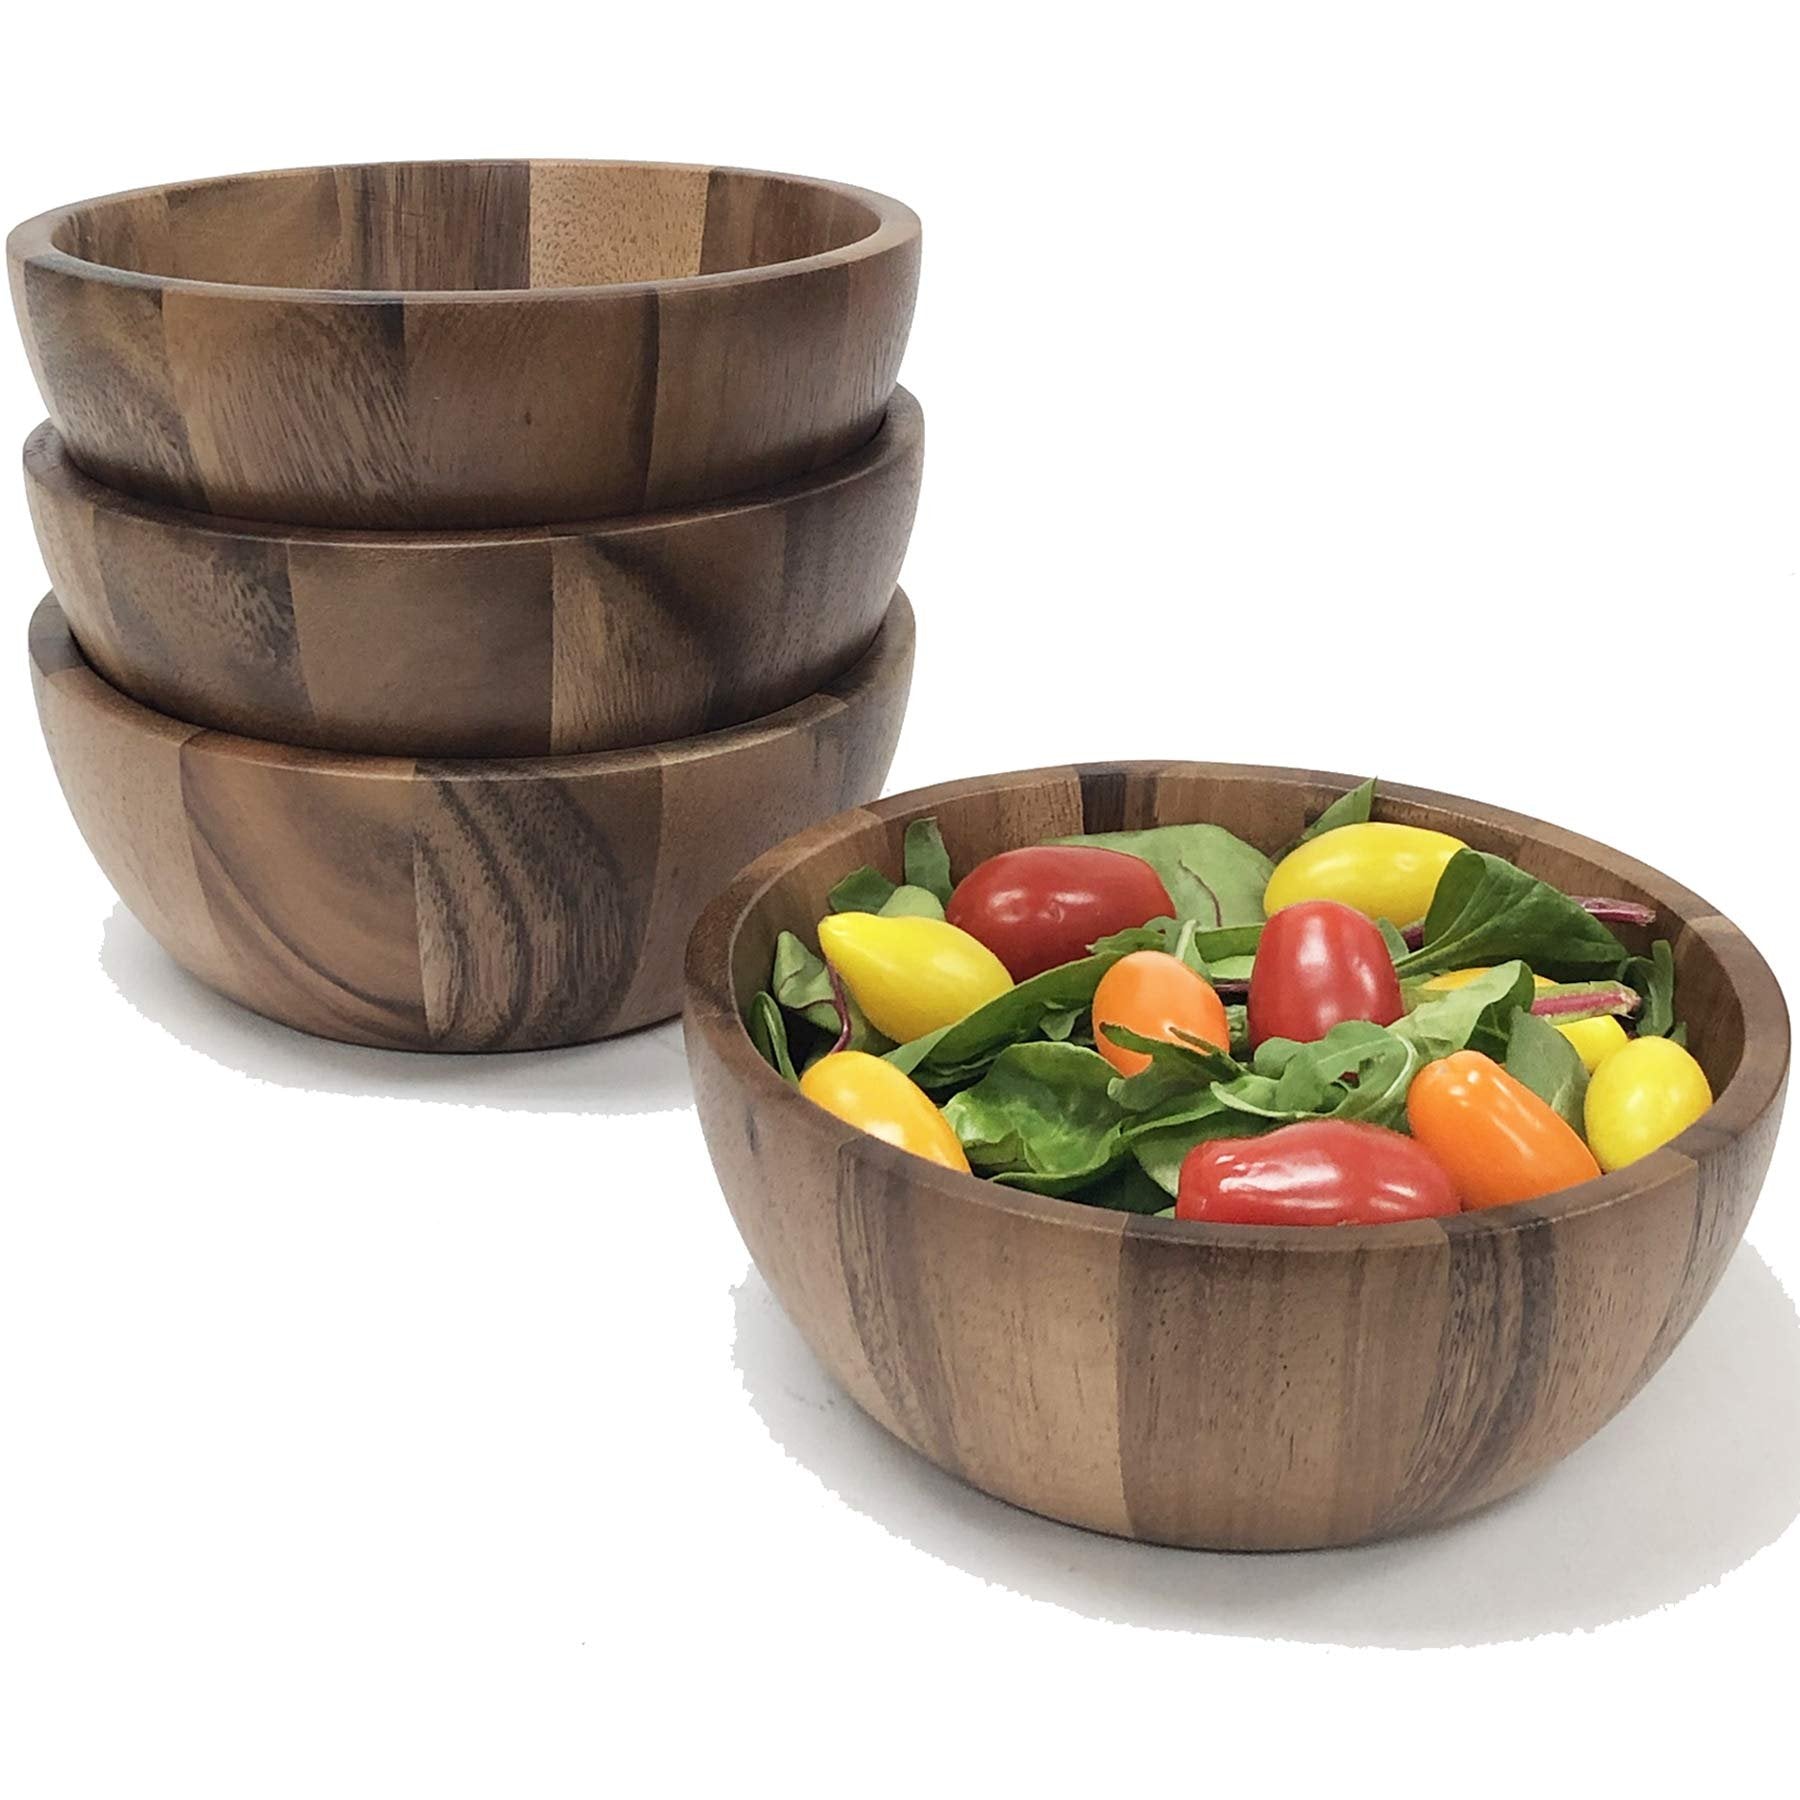 Woodard & Charles Set of 4 Acacia Wood Individual Serving Bowls For Salads, Fruits, Snacks, Nuts, Candy, 6 1/2" x 2 1/2"